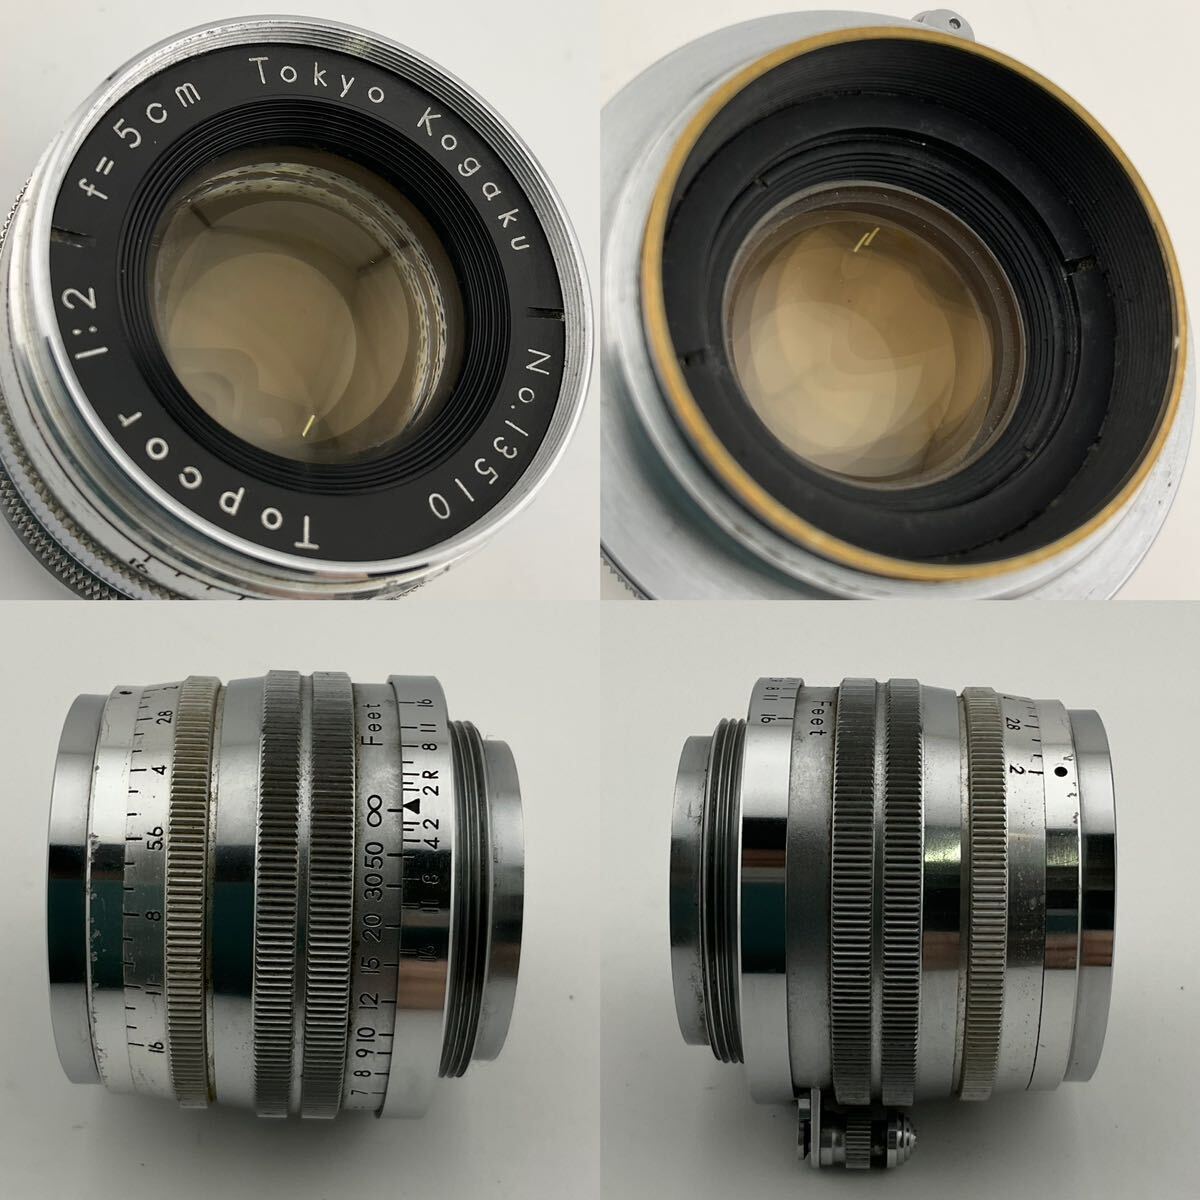 Leotax F Showa Optical Works, Ltd. No 545432 Topcor 1:2 f=5cm Tokyo Kogaku コンパクトフィルムカメラ (k5530-y165)_画像9